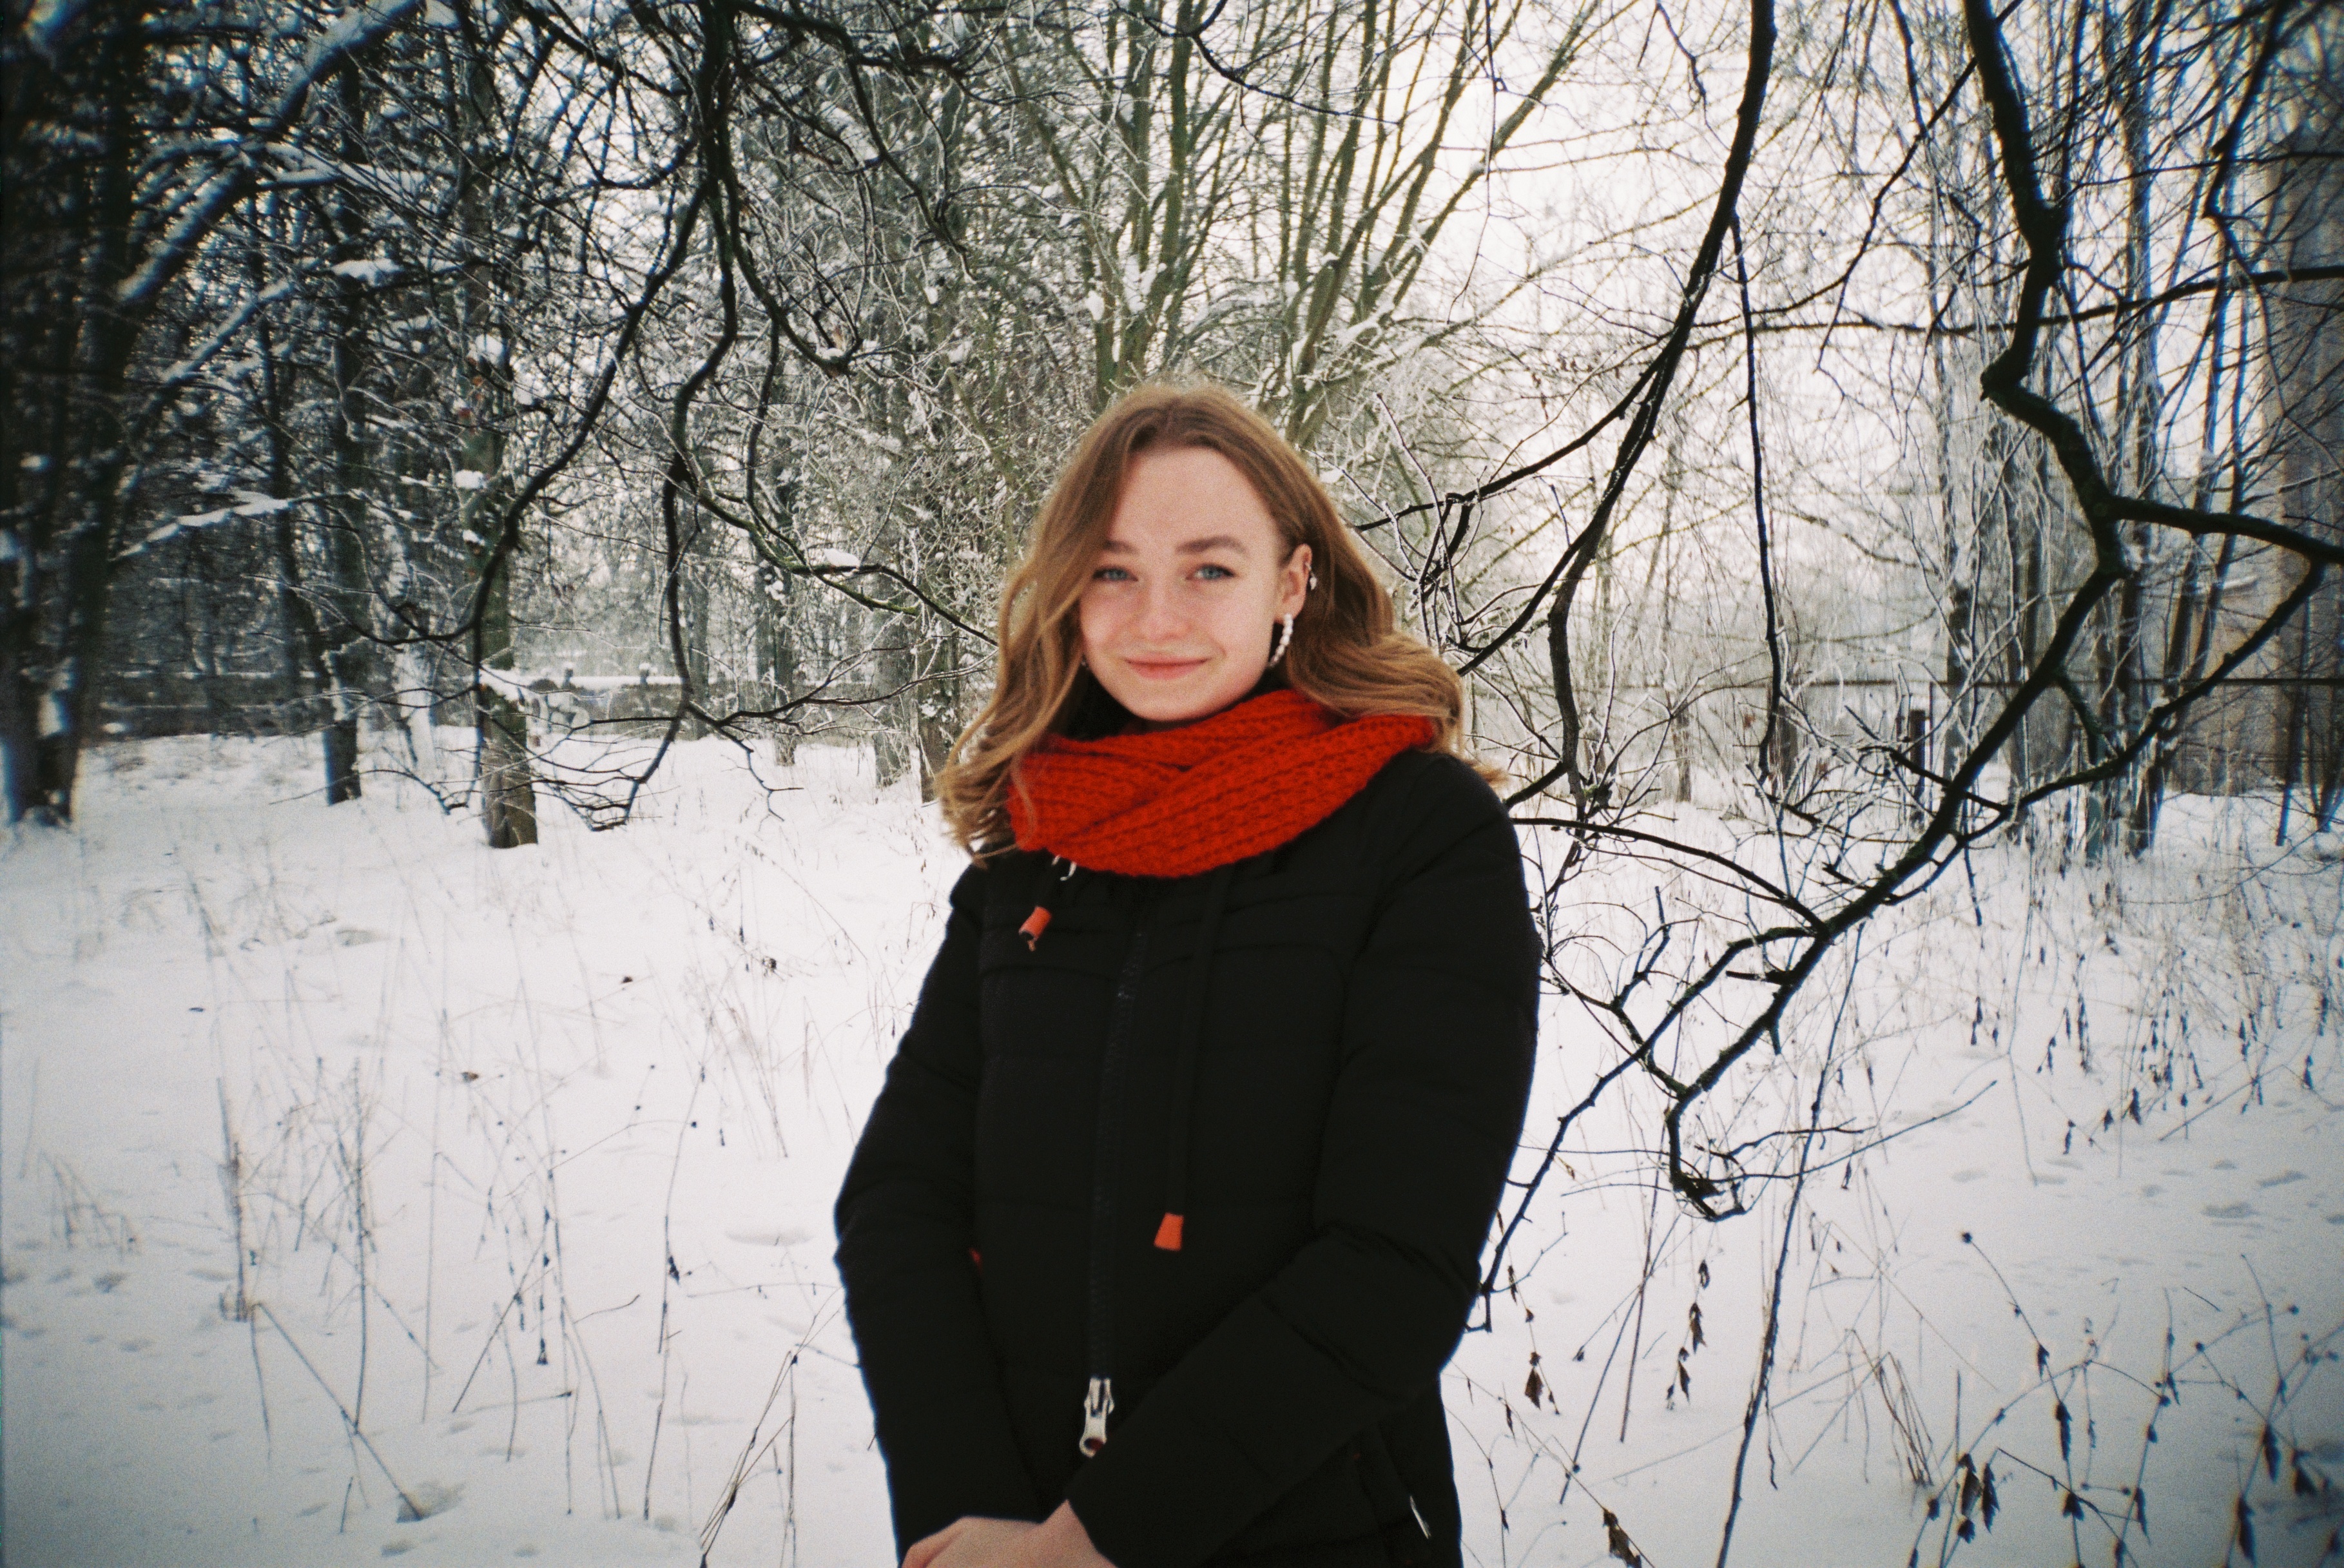 Зимнее фото девушки в лесу